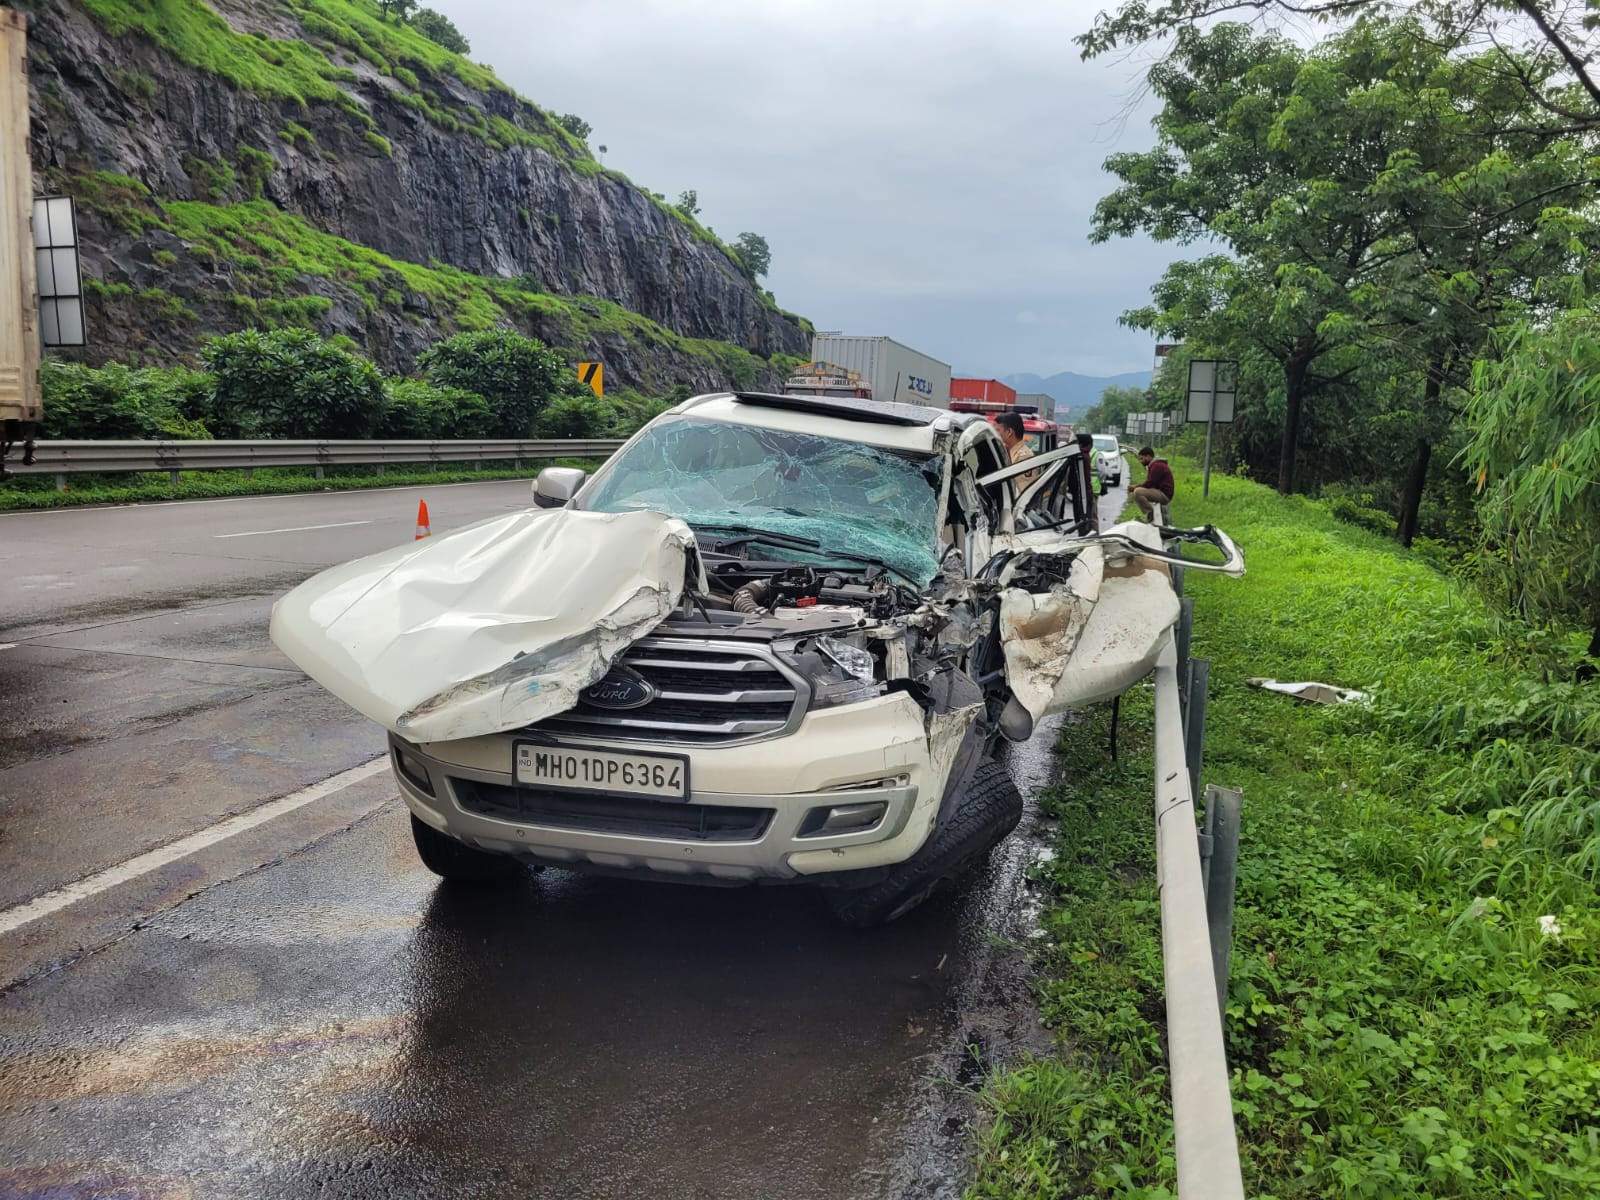 vinayak mete death news car accident